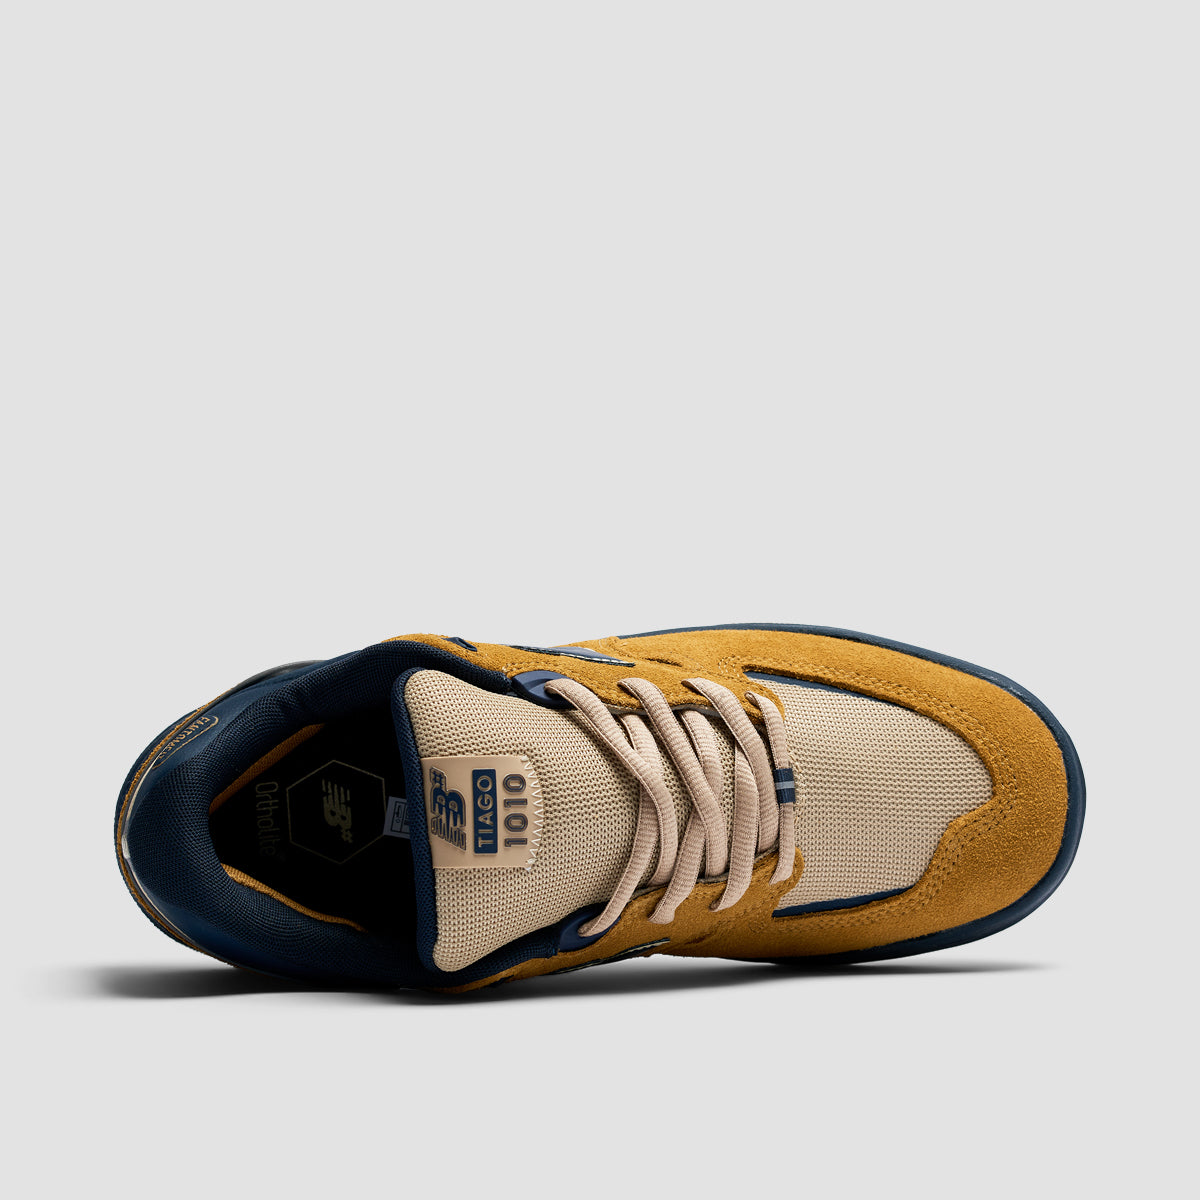 New Balance Numeric Tiago 1010 Shoes - Wheat Navy